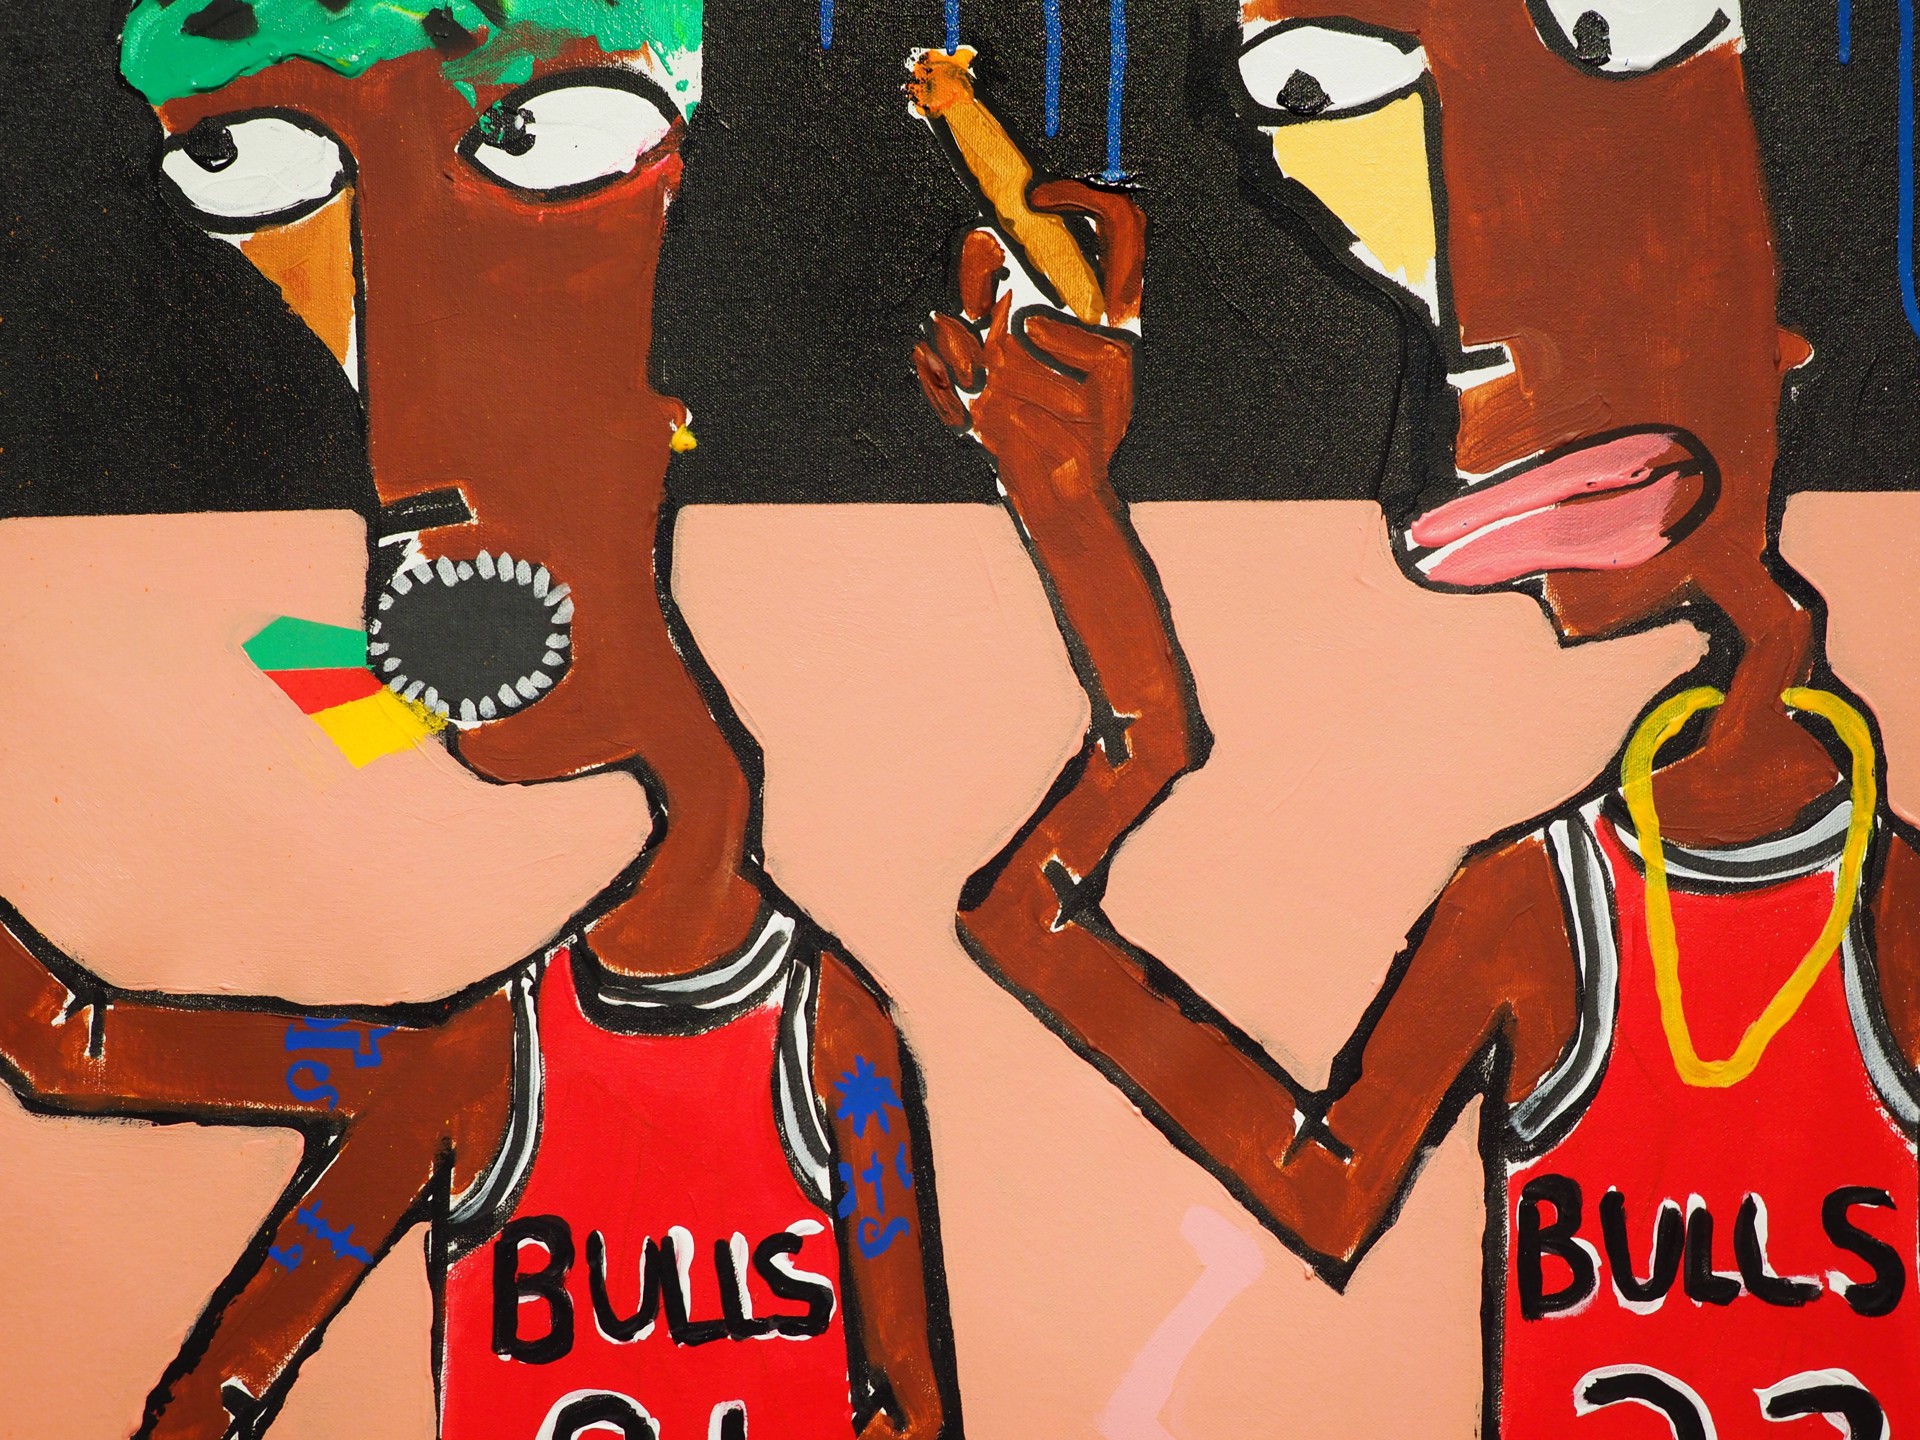 96 Bulls by Brandon Jones